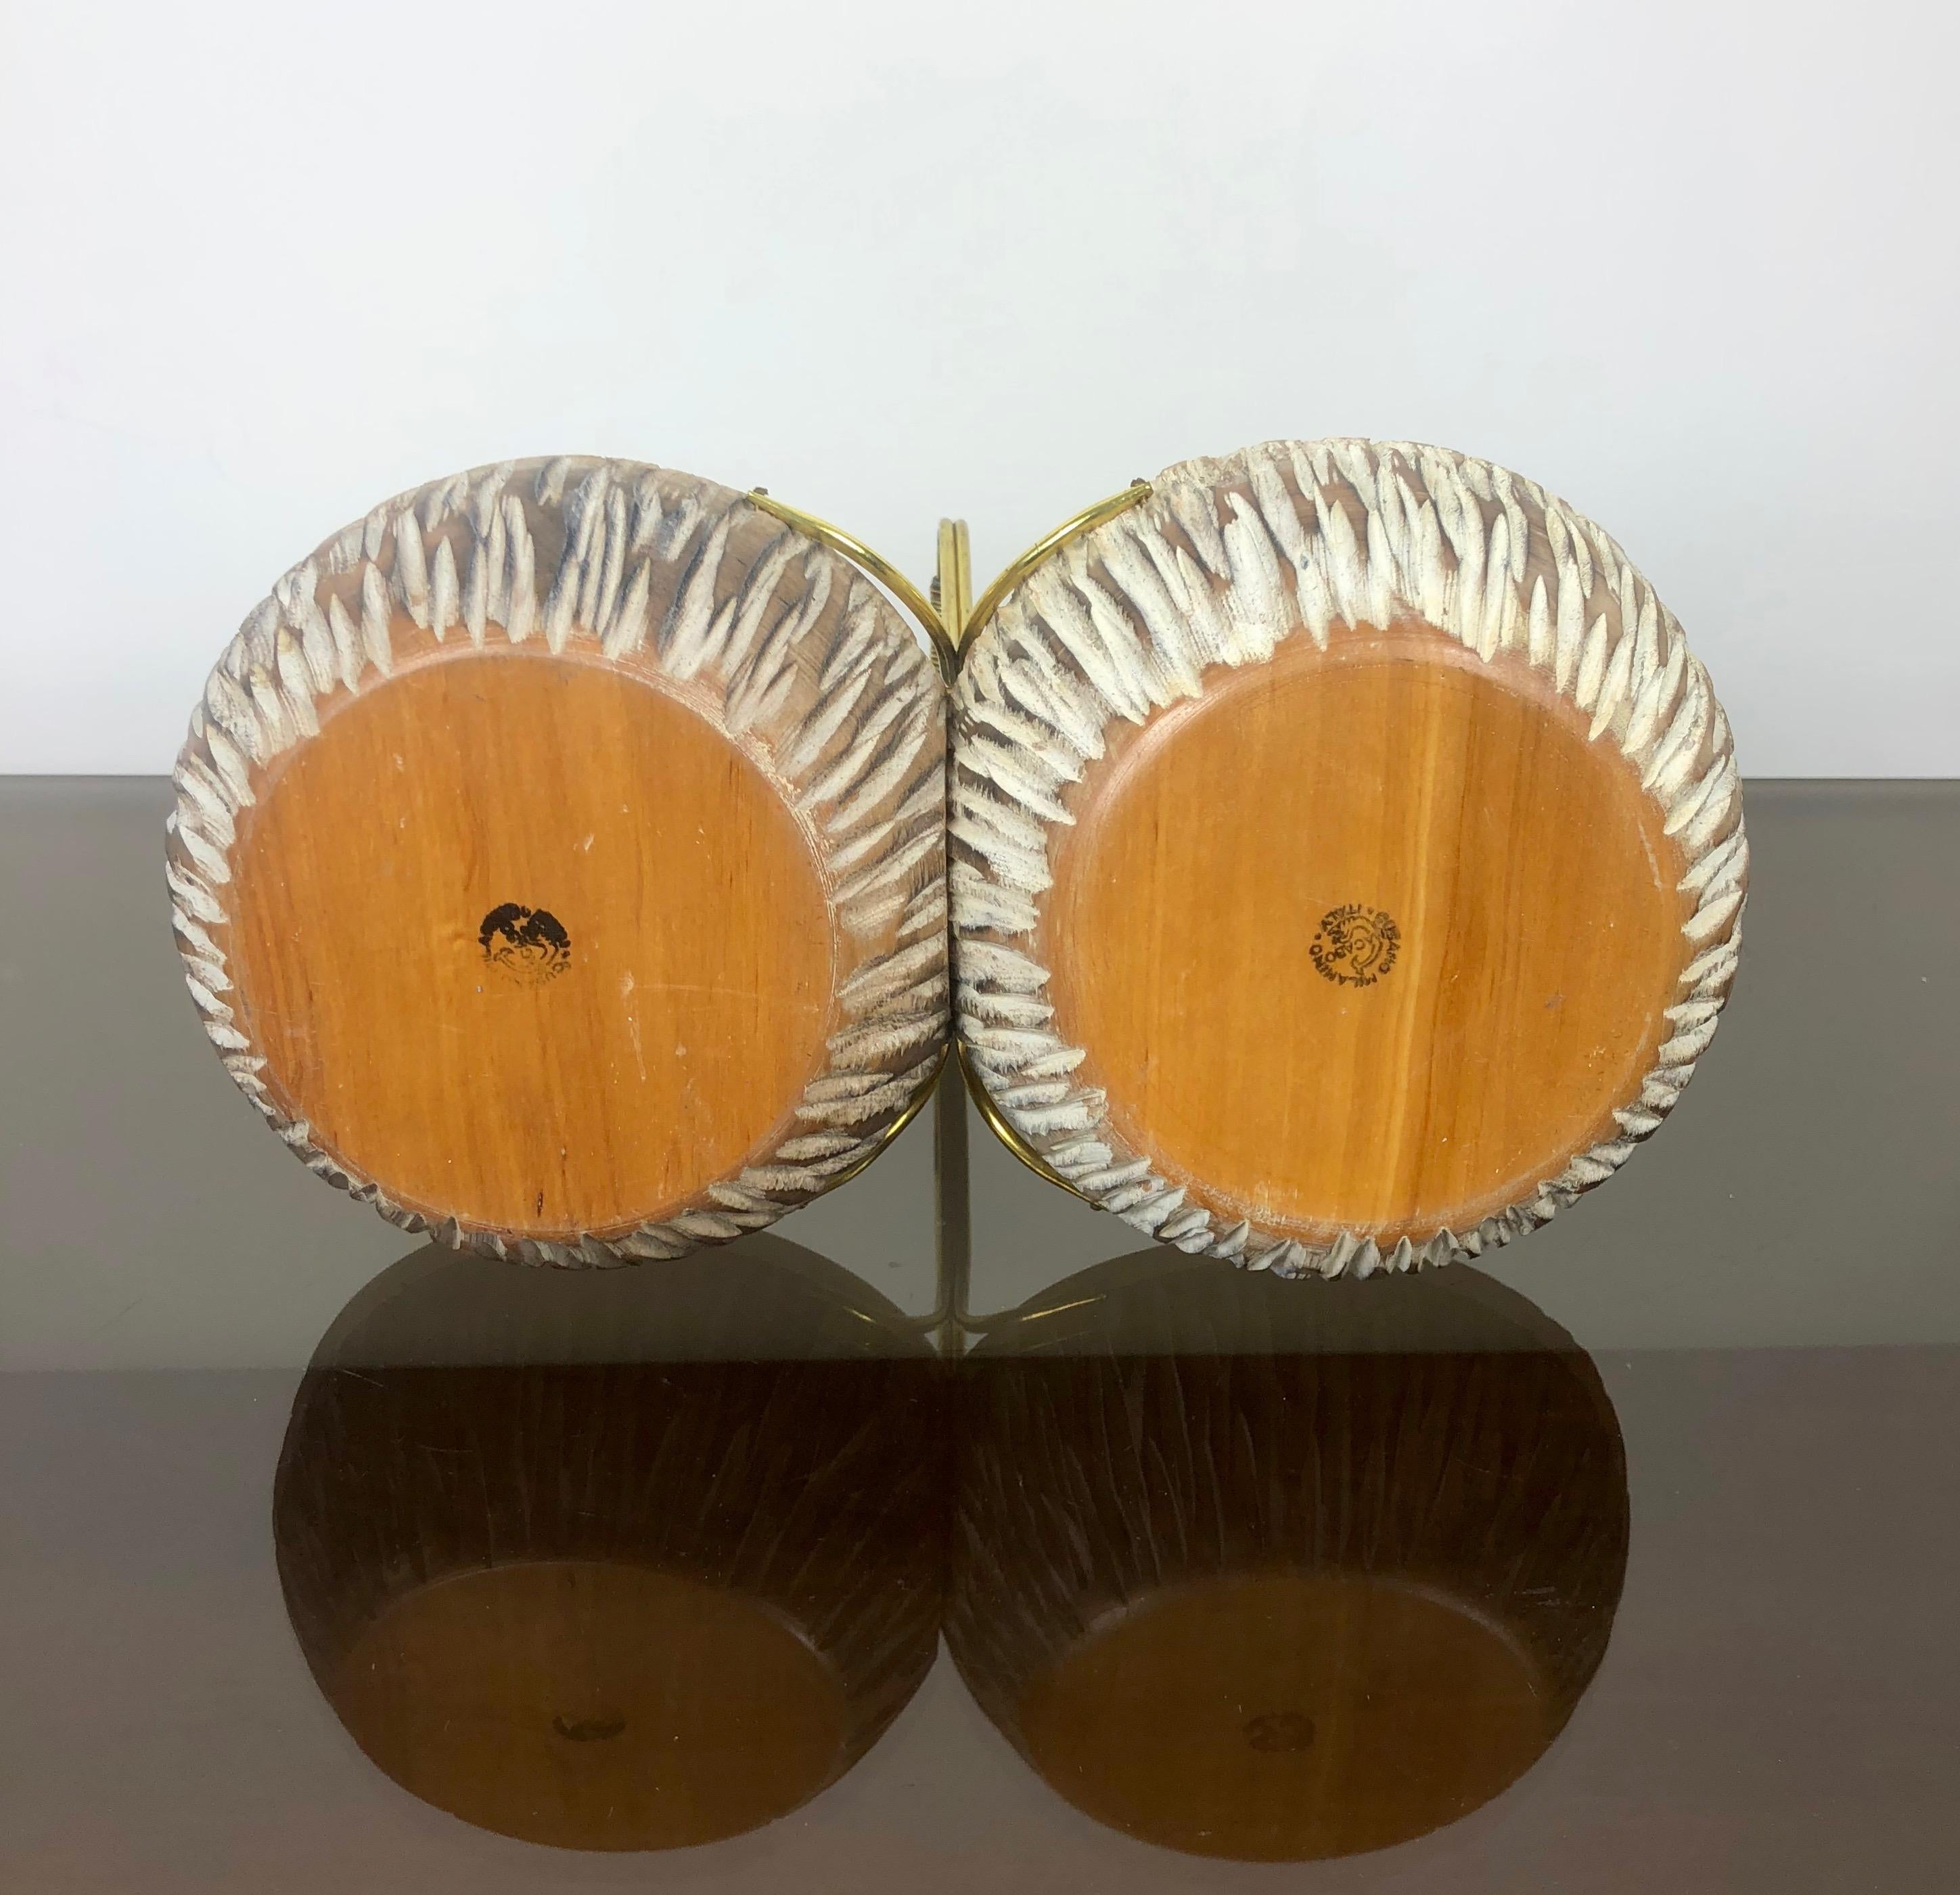 Aldo Tura Macabo Walnut Bowl Basket Centrepiece Hand Carved Wood and Brass Italy 2